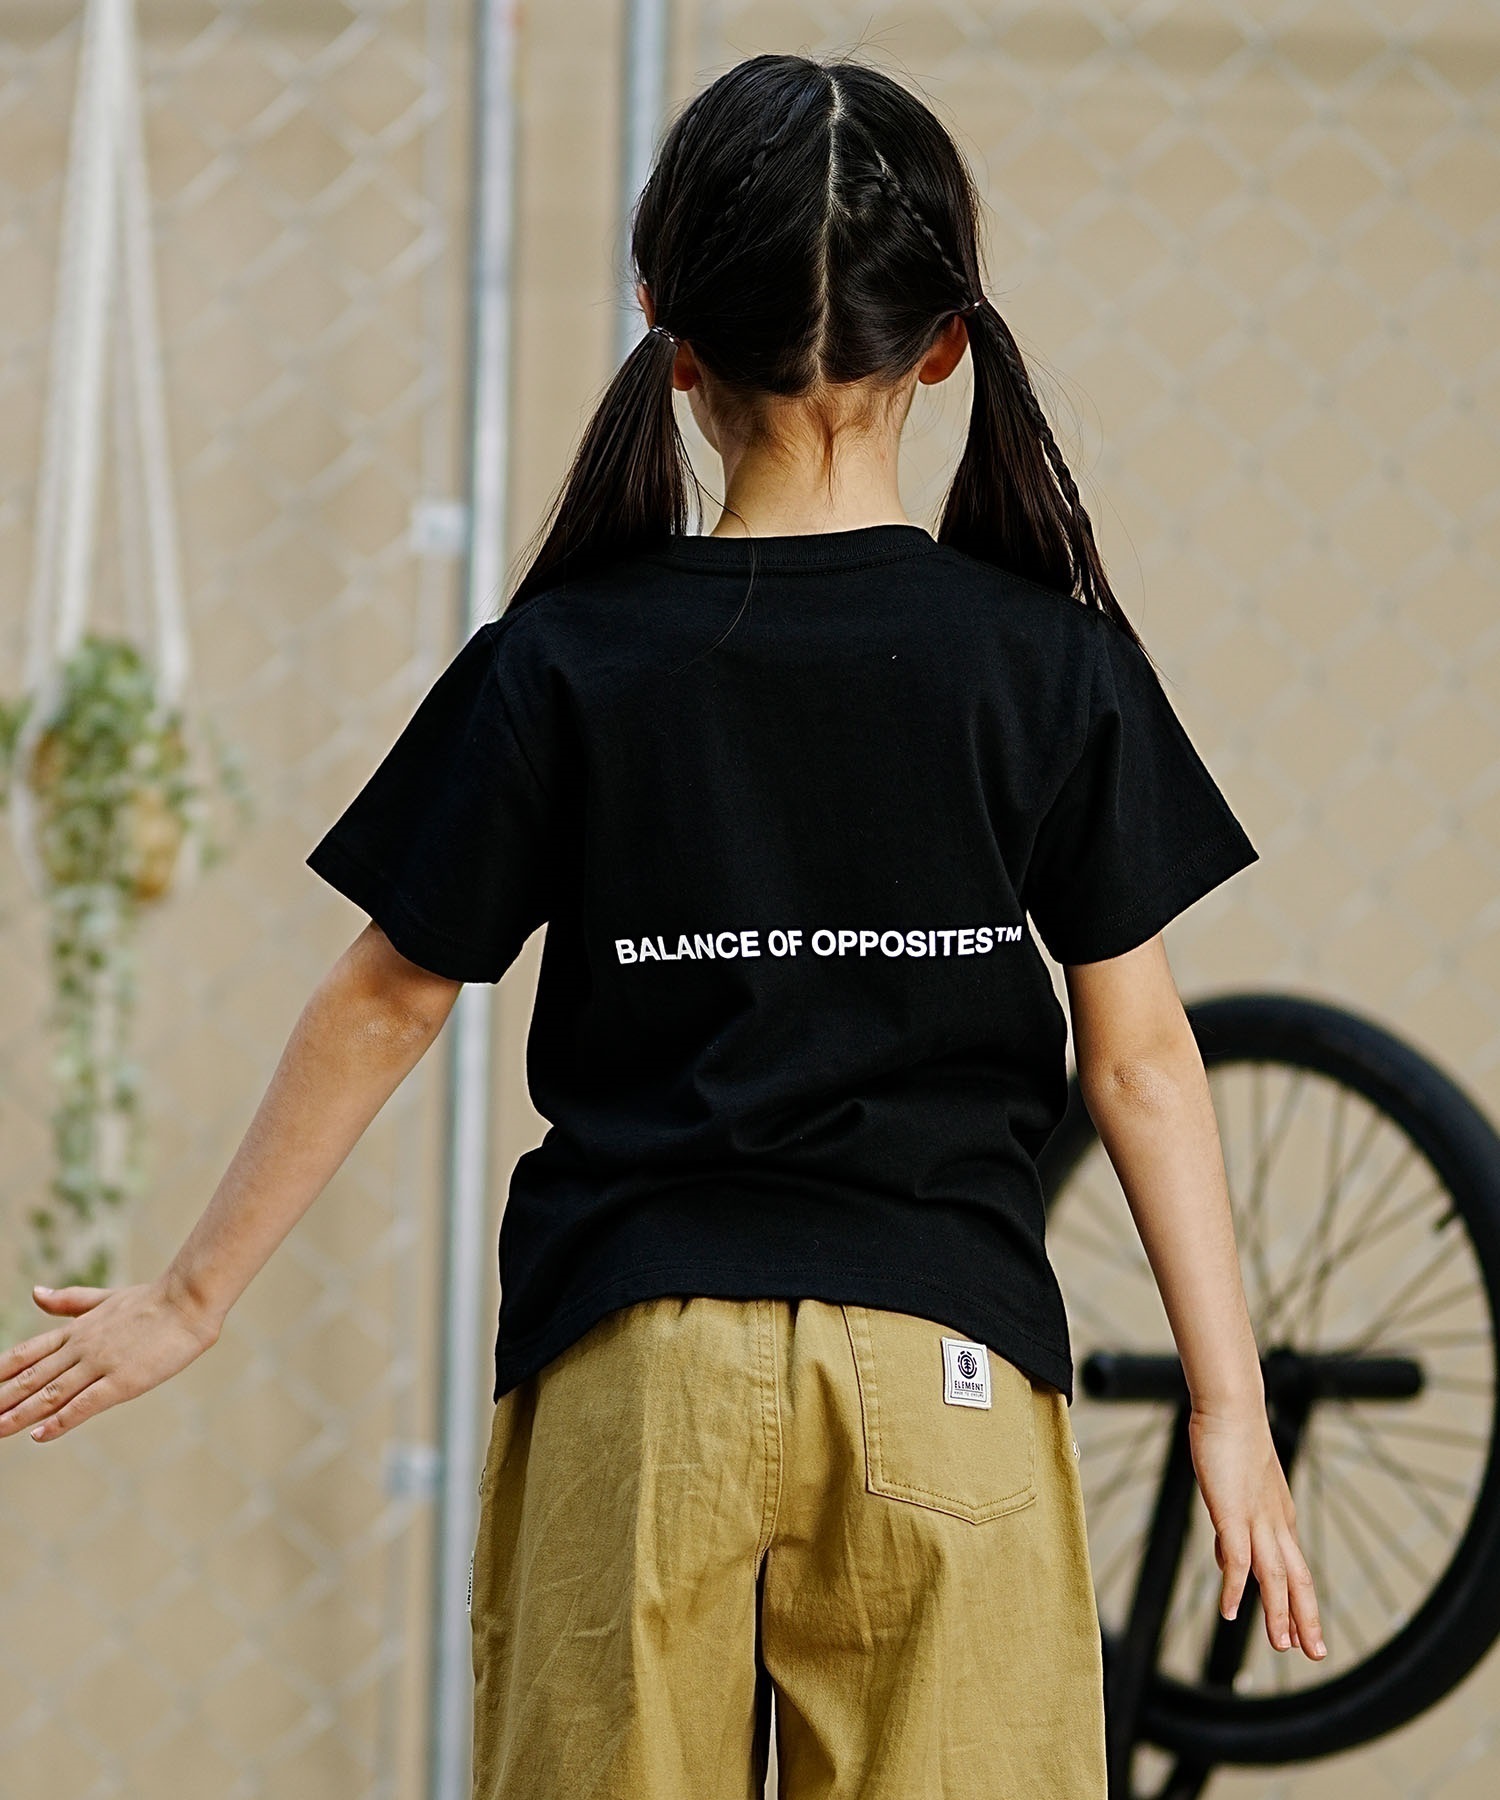 RVCA ルーカ キッズ 半袖Tシャツ 定番ロゴデザイン 親子コーデ BE045-226(WHT-130cm)